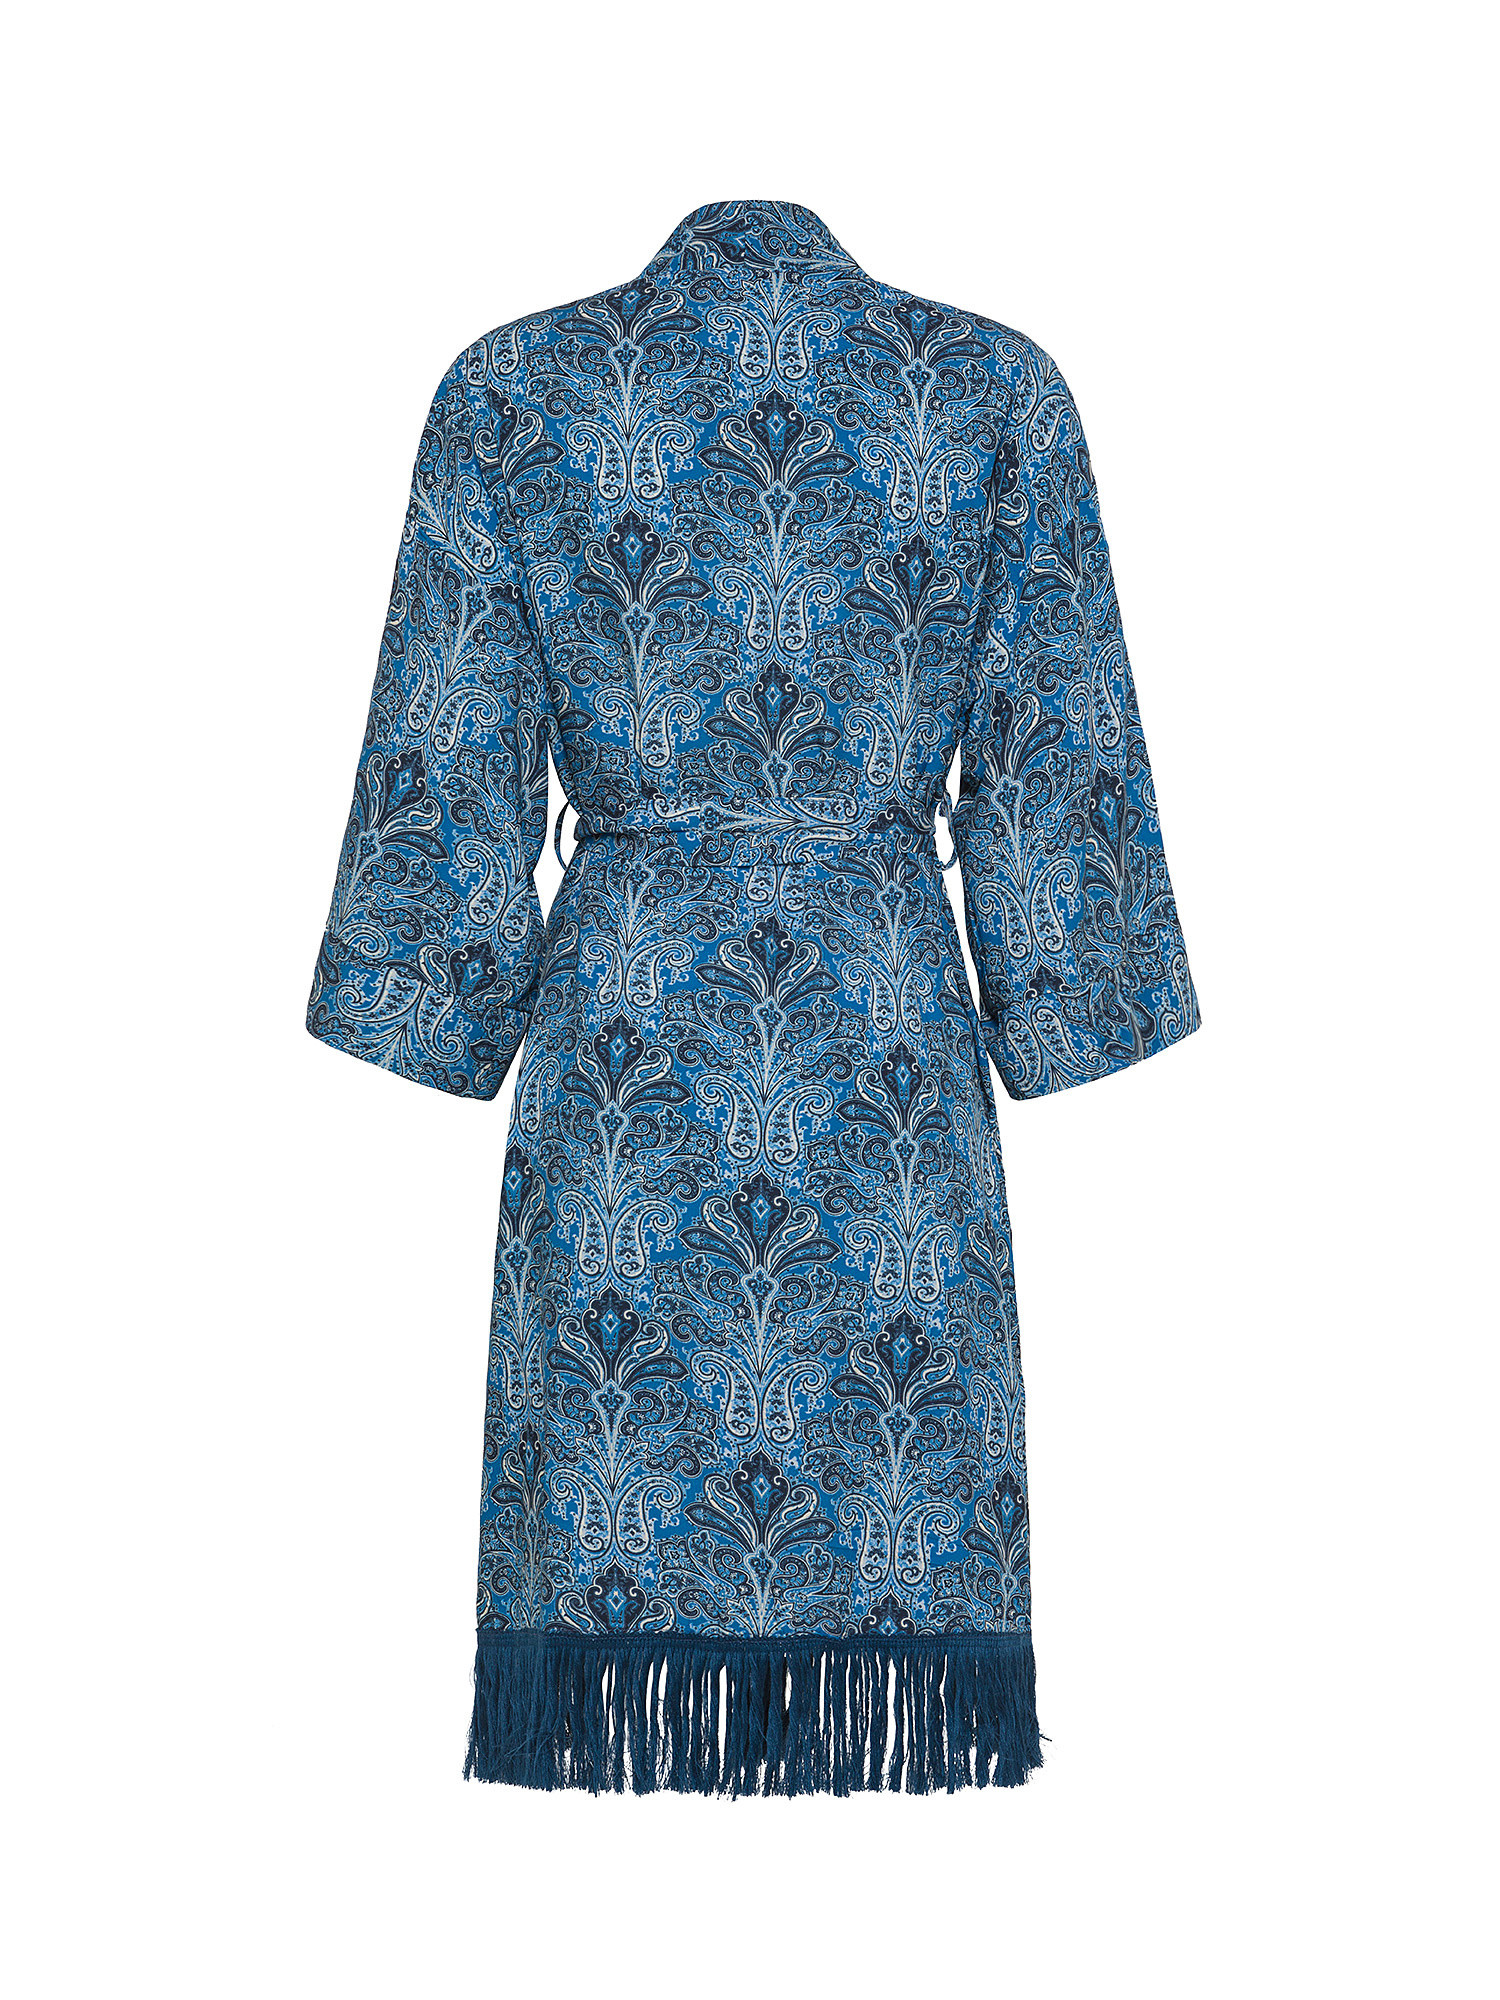 Paisley print viscose kimono, Blue, large image number 1